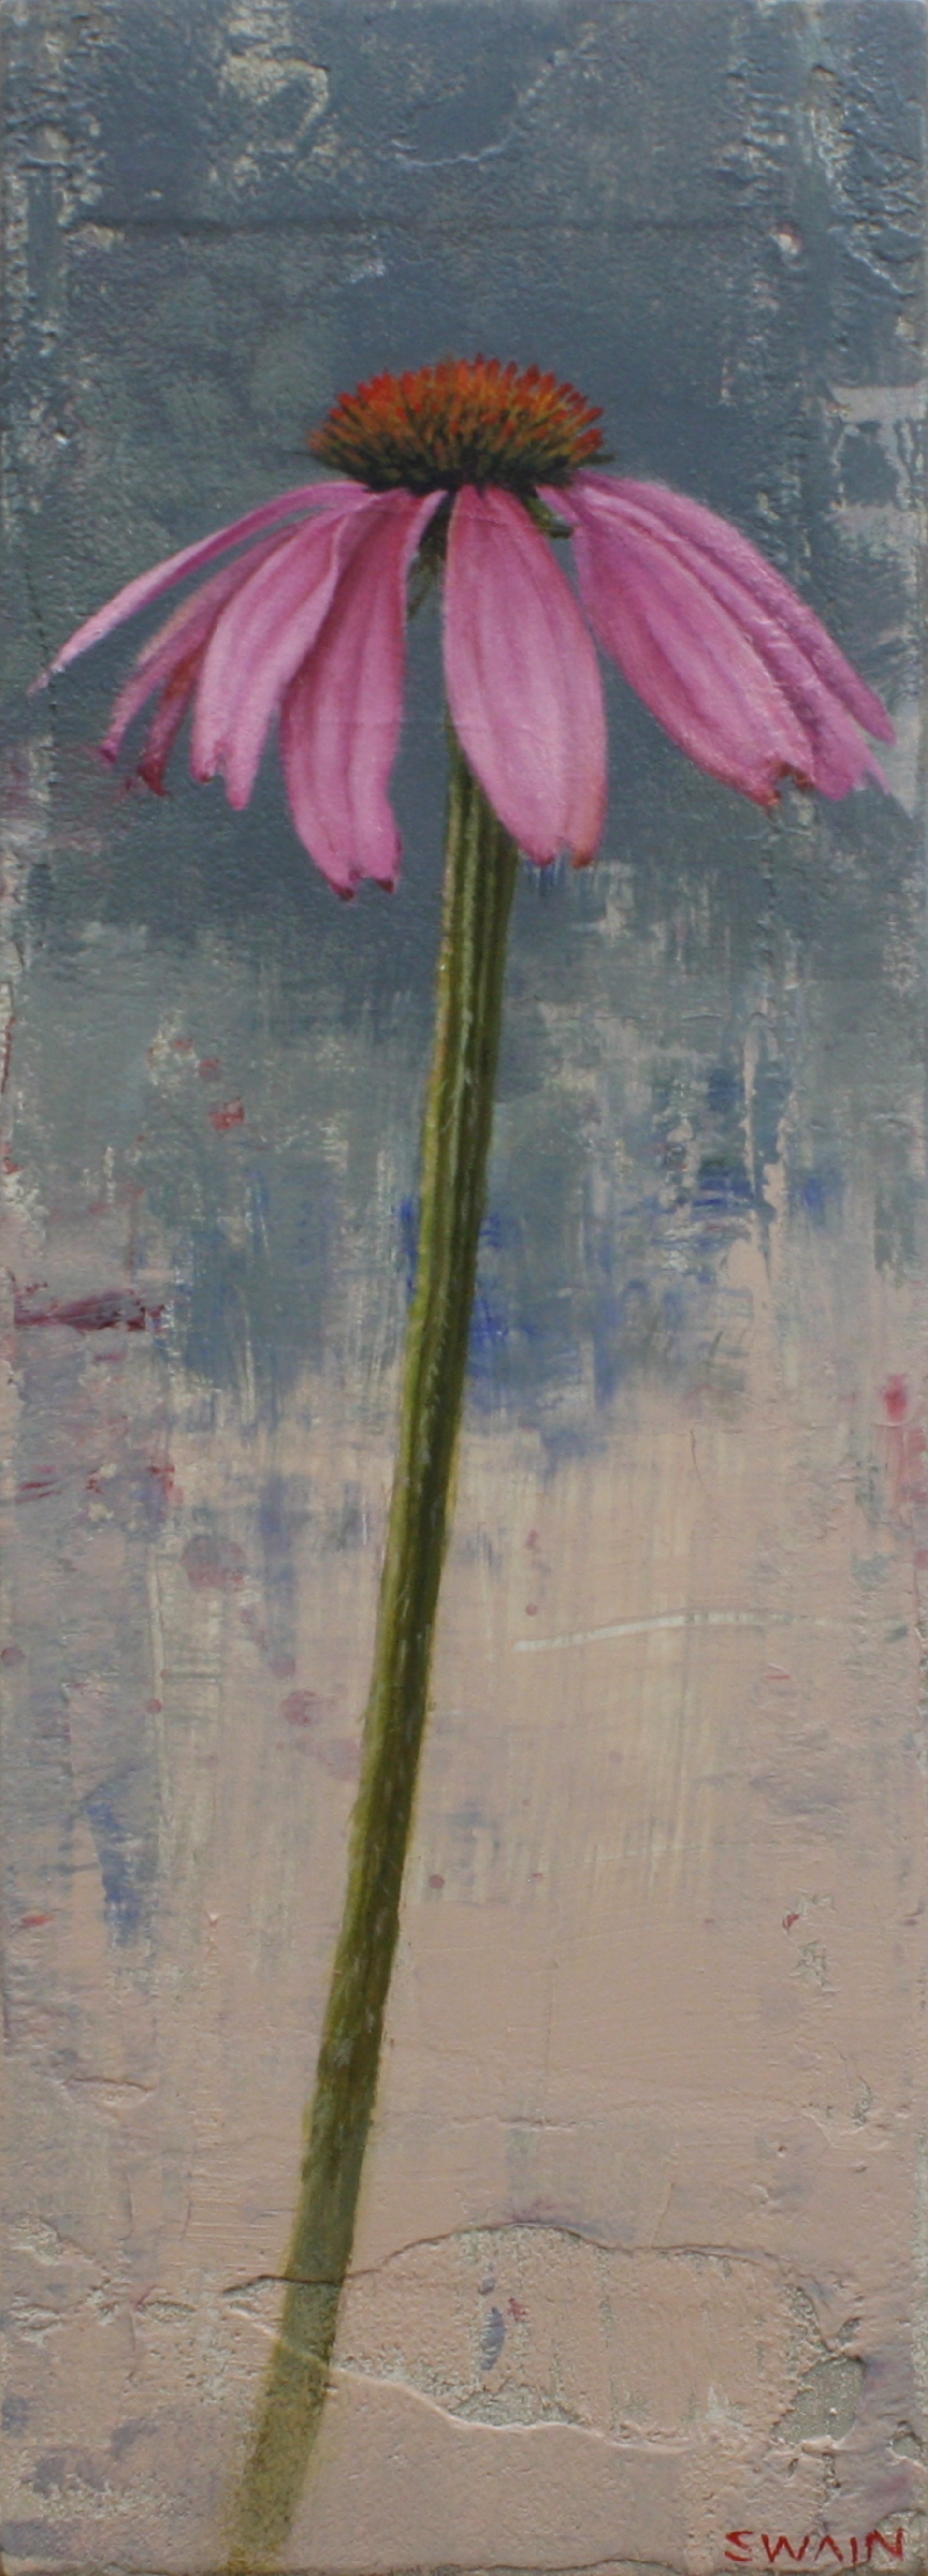 Echinacea by Tyler Swain